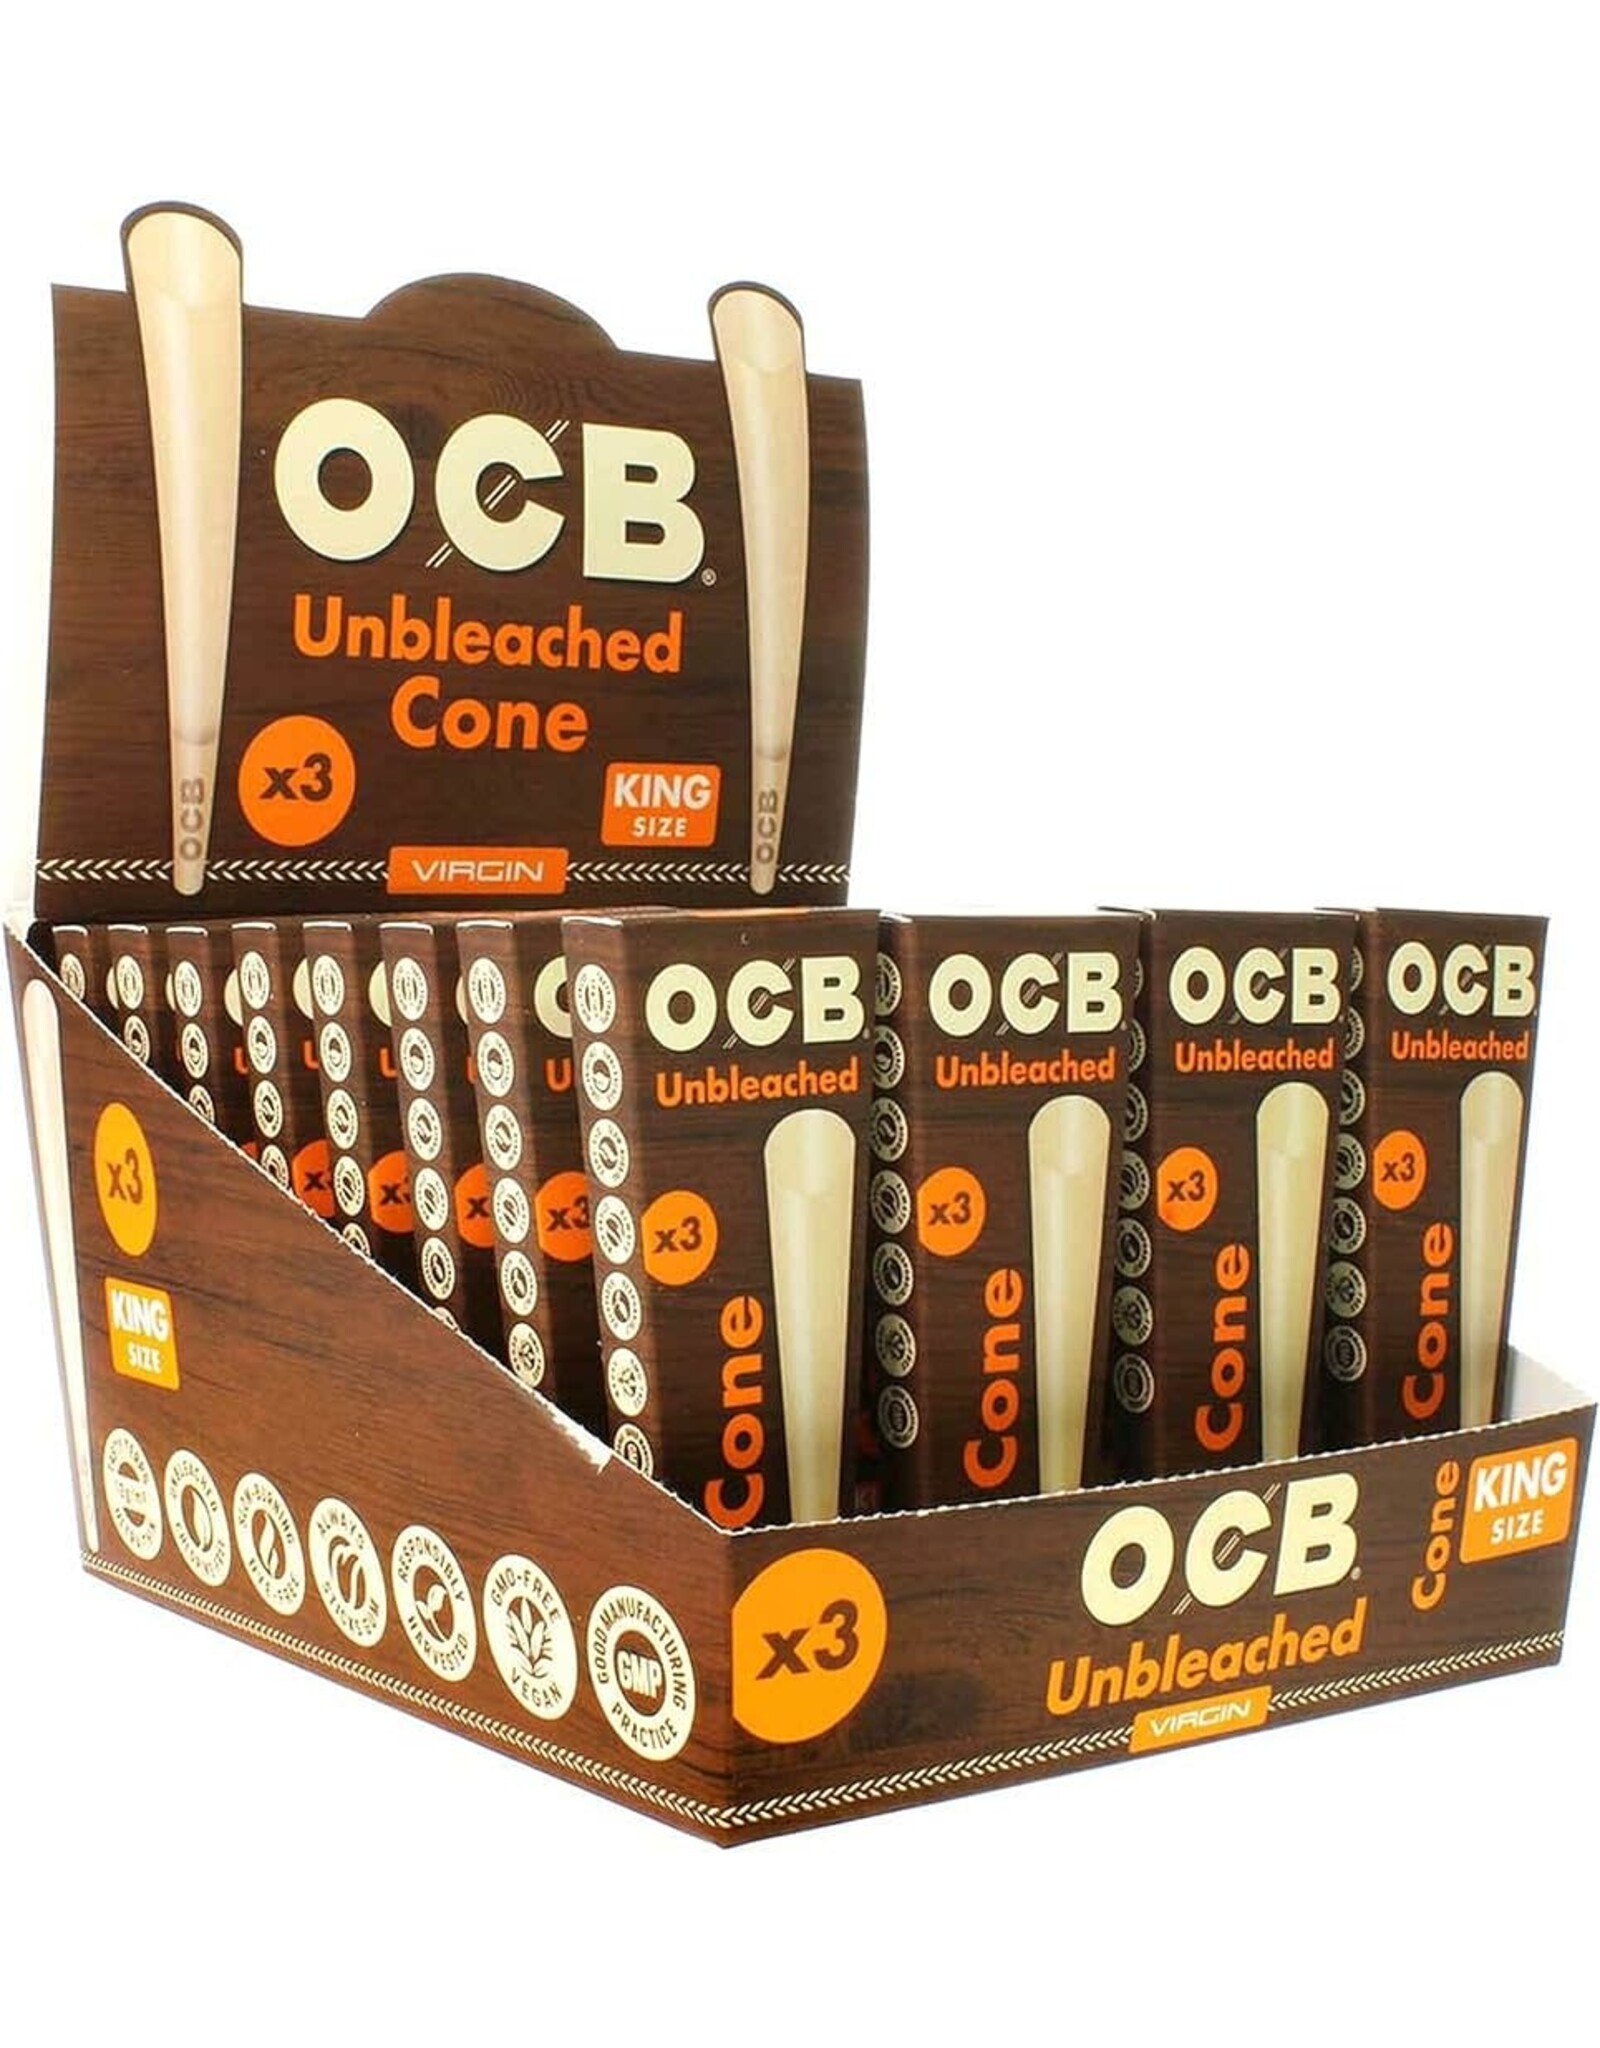 OCB OCB Virgin Unbleached Cone King Size Box 32ct